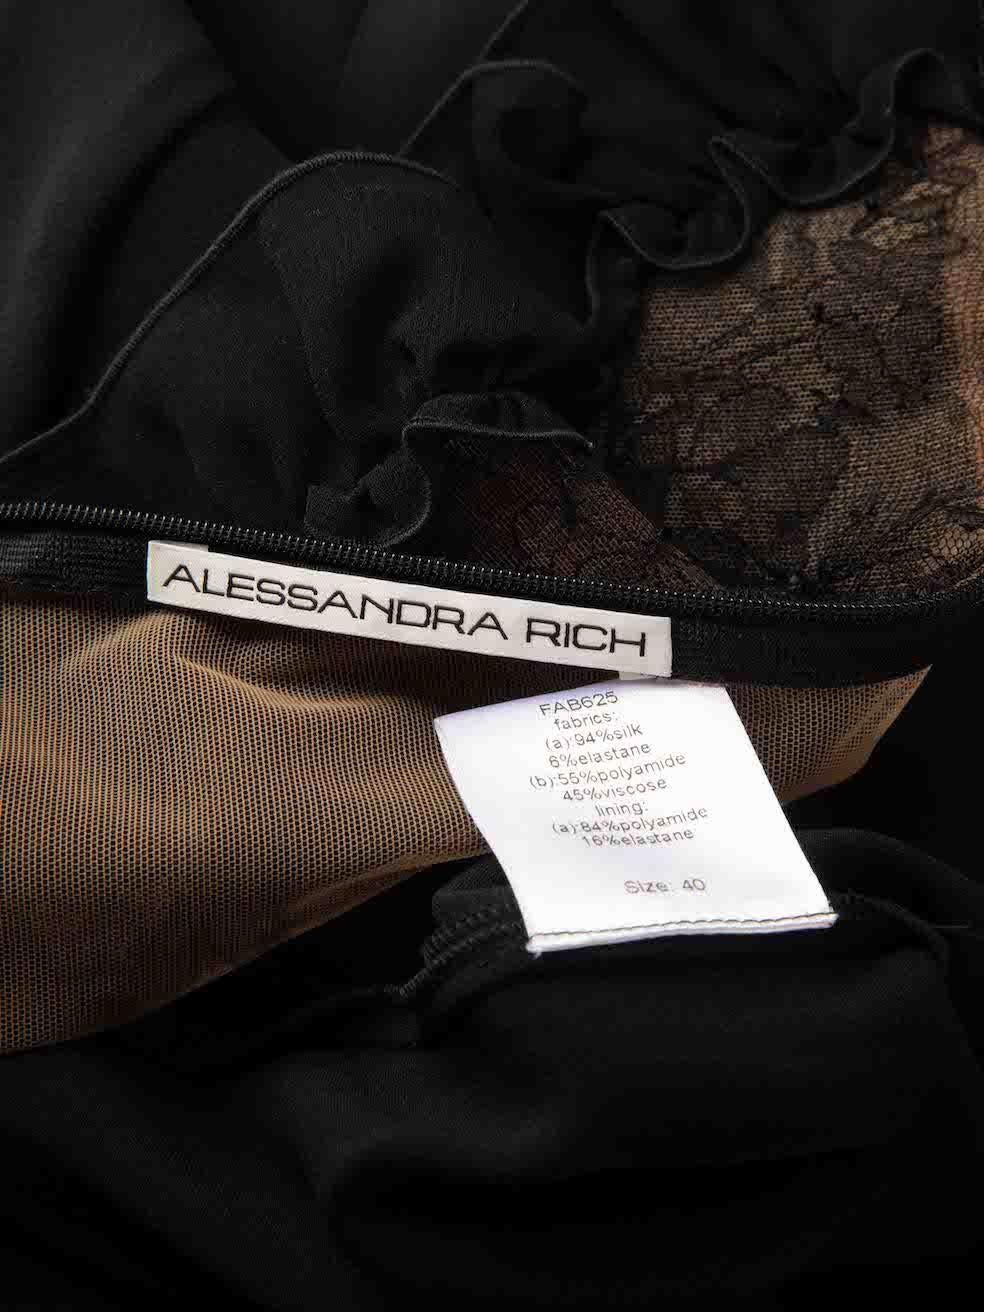 Alessandra Rich Black Lace Detail Maxi Dress Size S For Sale 2